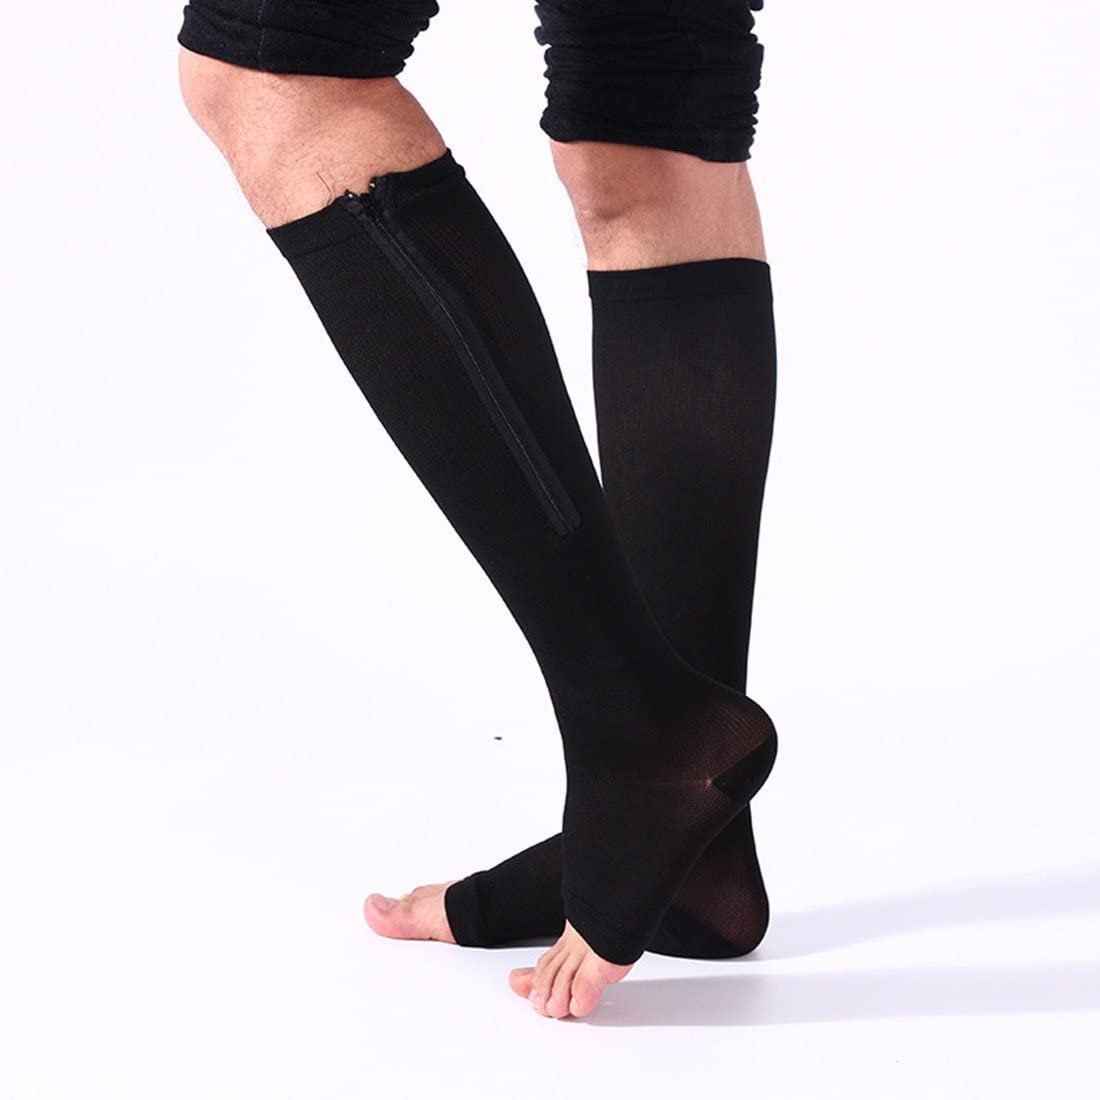 (2 Pairs)Compression Medical Zip Socks15-20mmHg, Black, Size Large-X ...